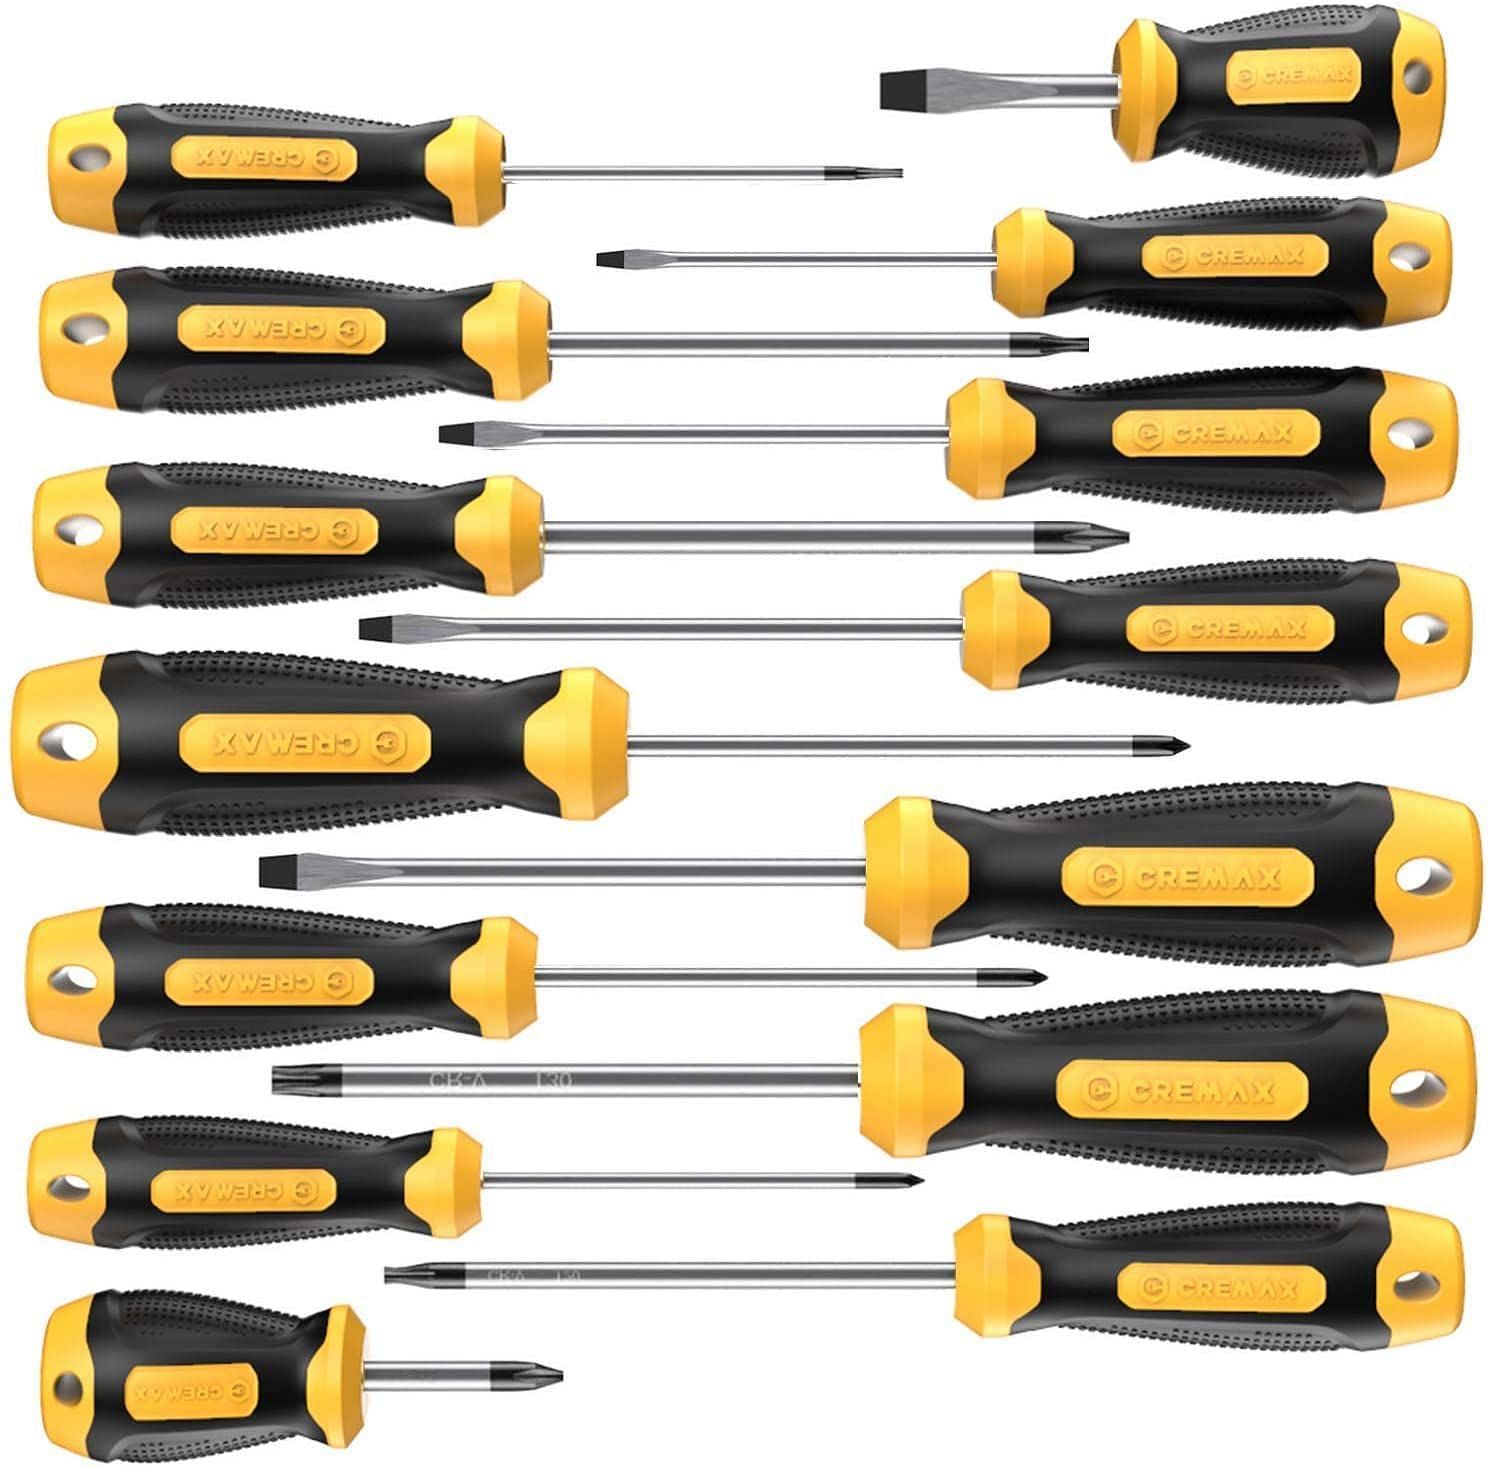 Magnetic screwdrivers (Image via Amazon)